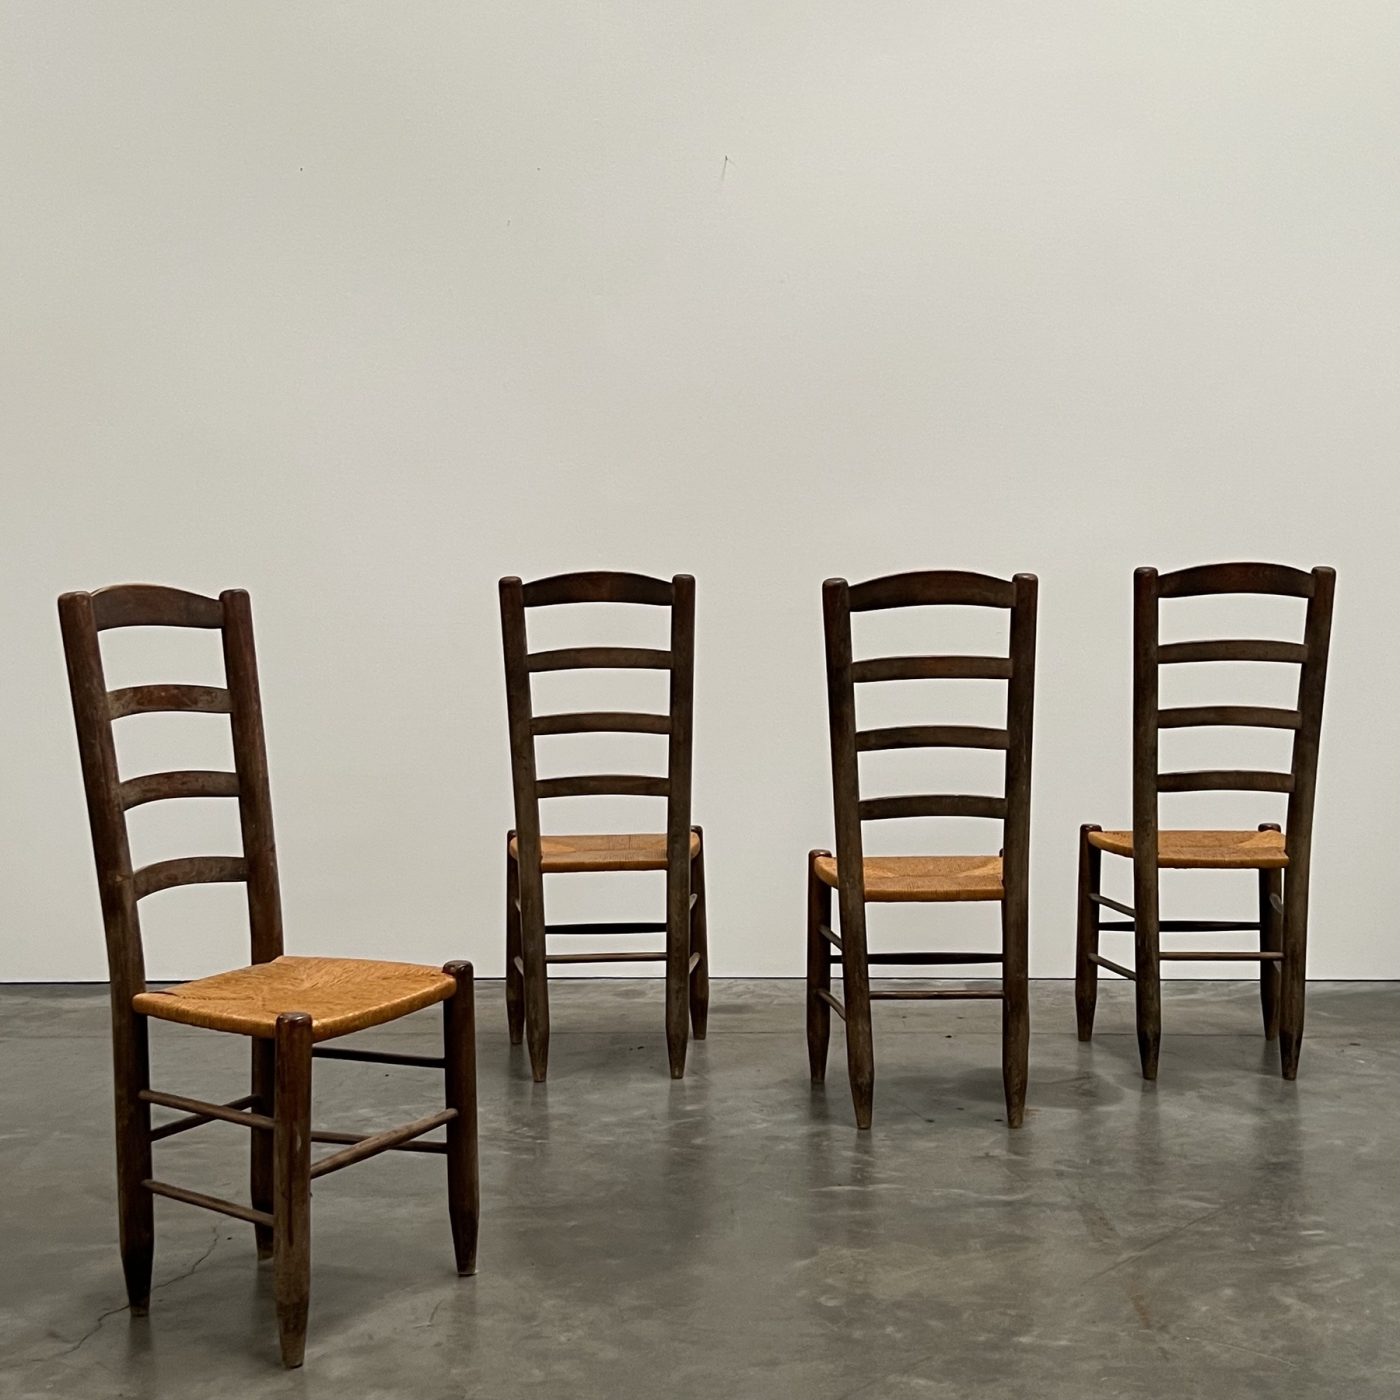 objet-vagabond-chairs0001